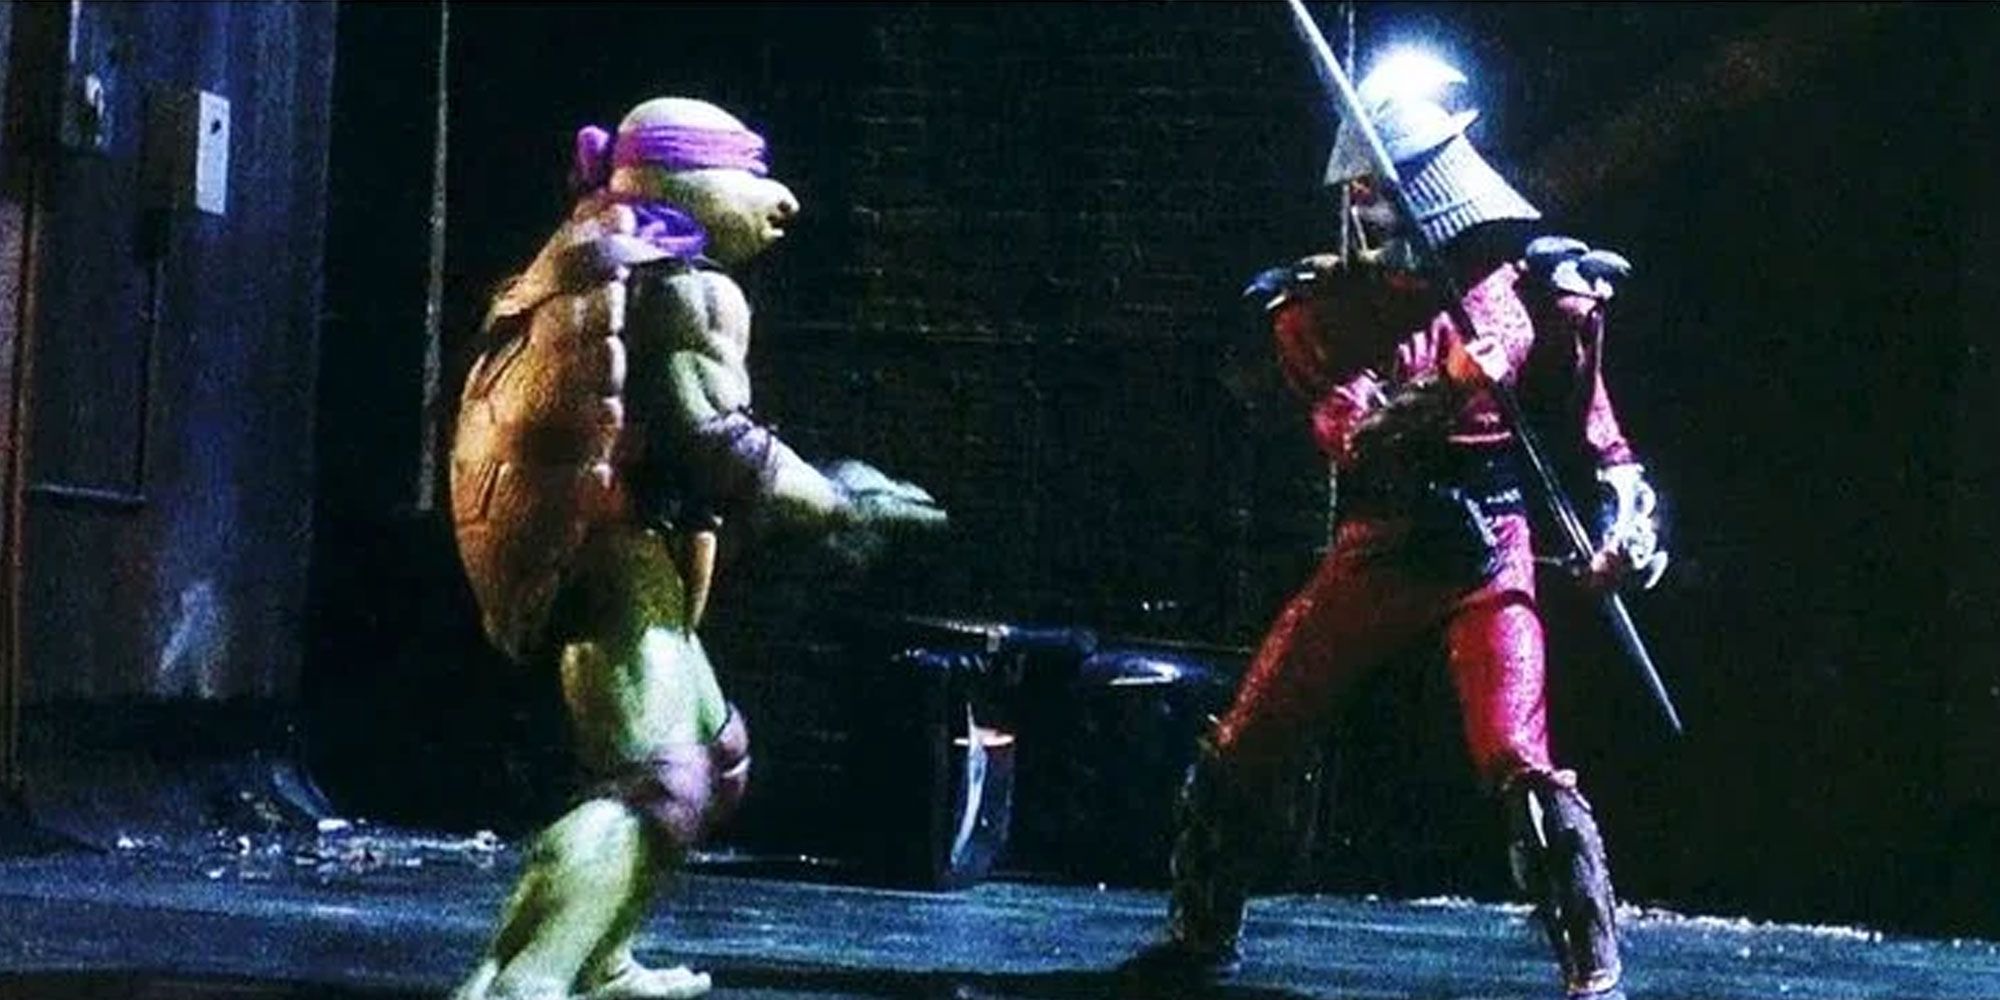 Donatello fights Shredder in the 90s Teenage Mutant Ninja Turtles live action movie